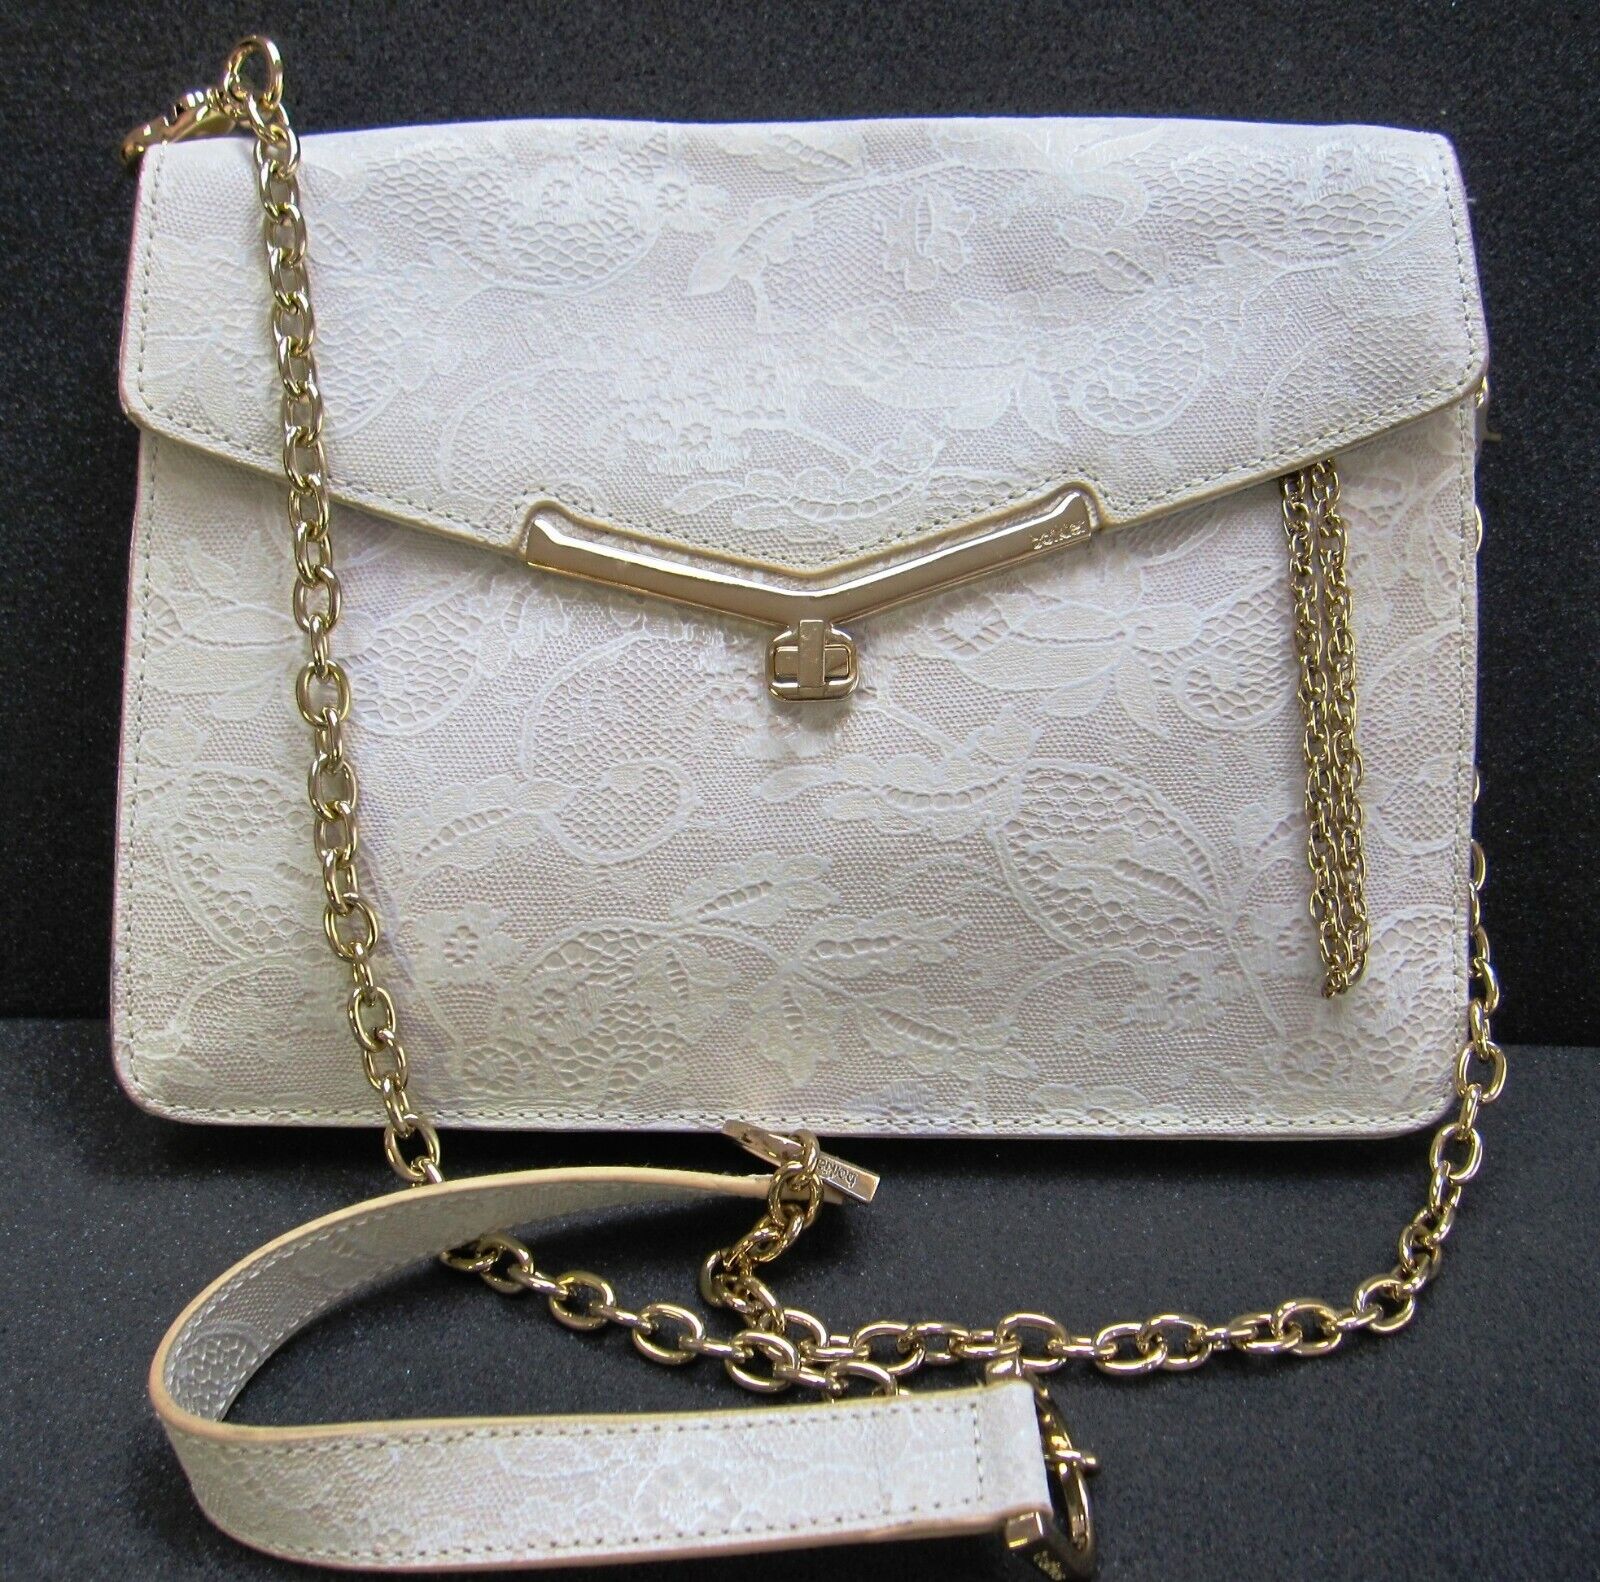 Botkier White Lace Leather Cross body Clutch Bag Handbag Goldish Hardware Chain 